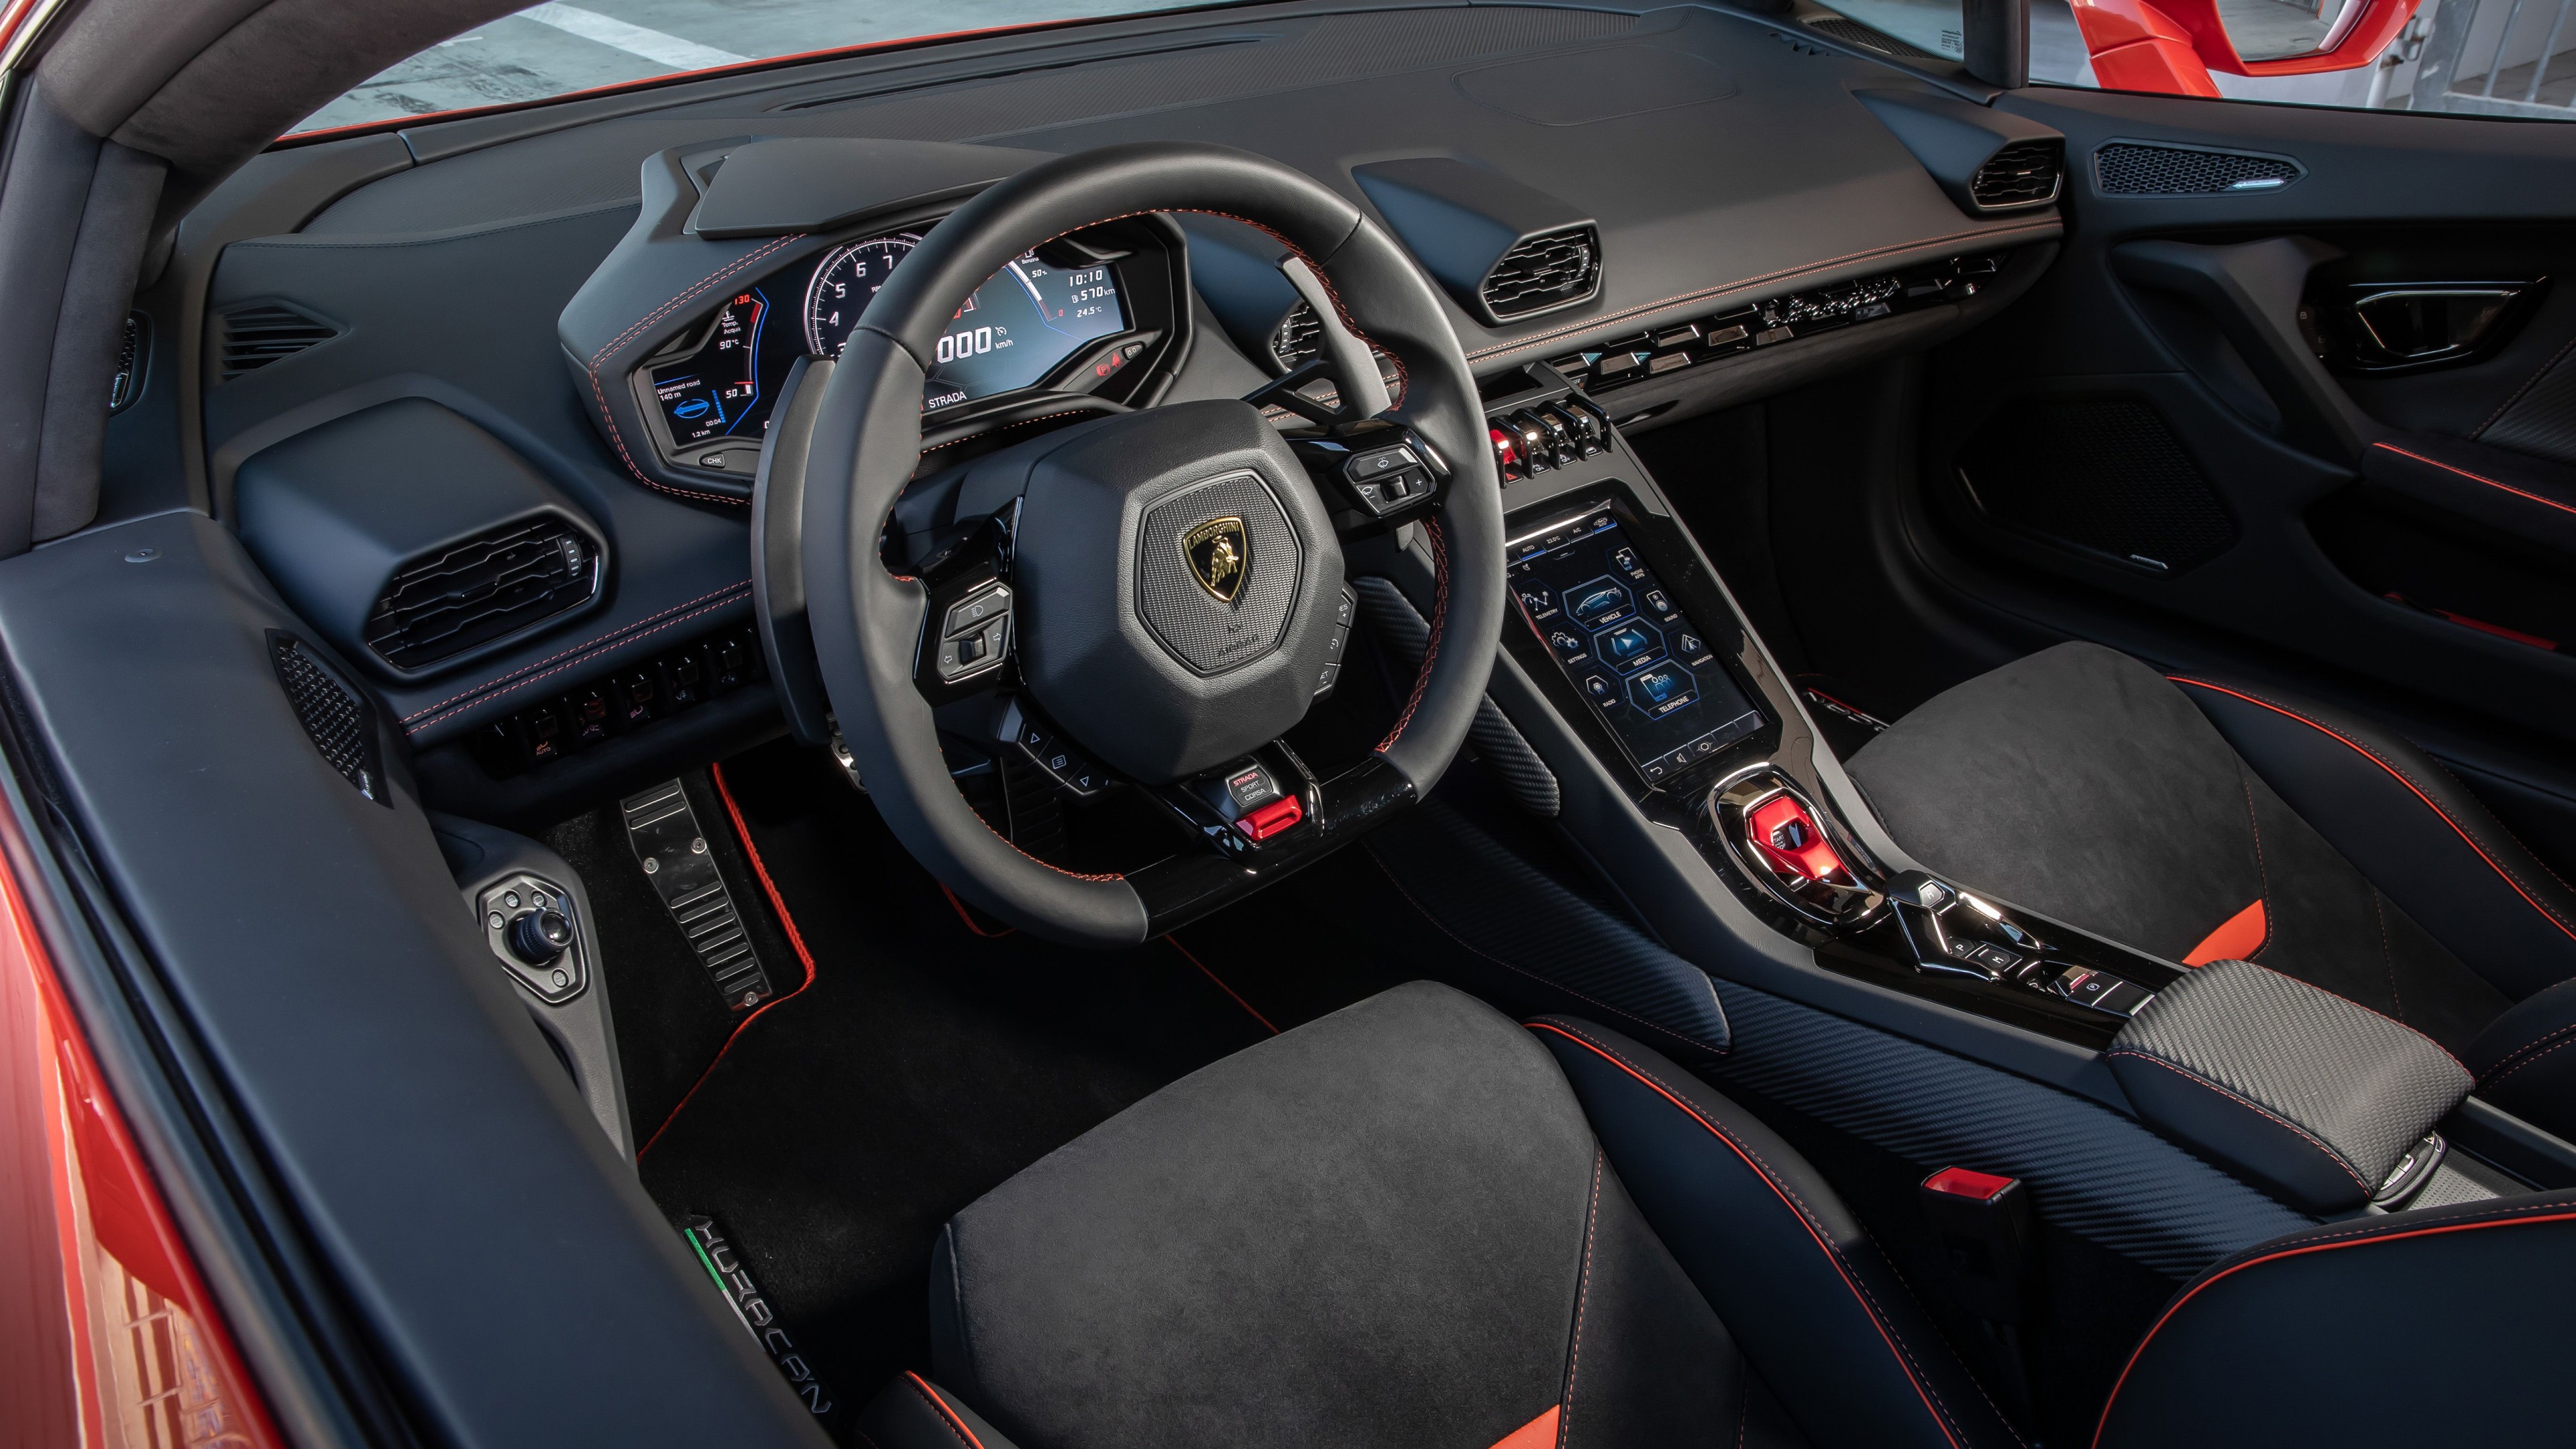 Lamborghini Huracan Evo Interior 5k 2019 Wallpaper Hd Car